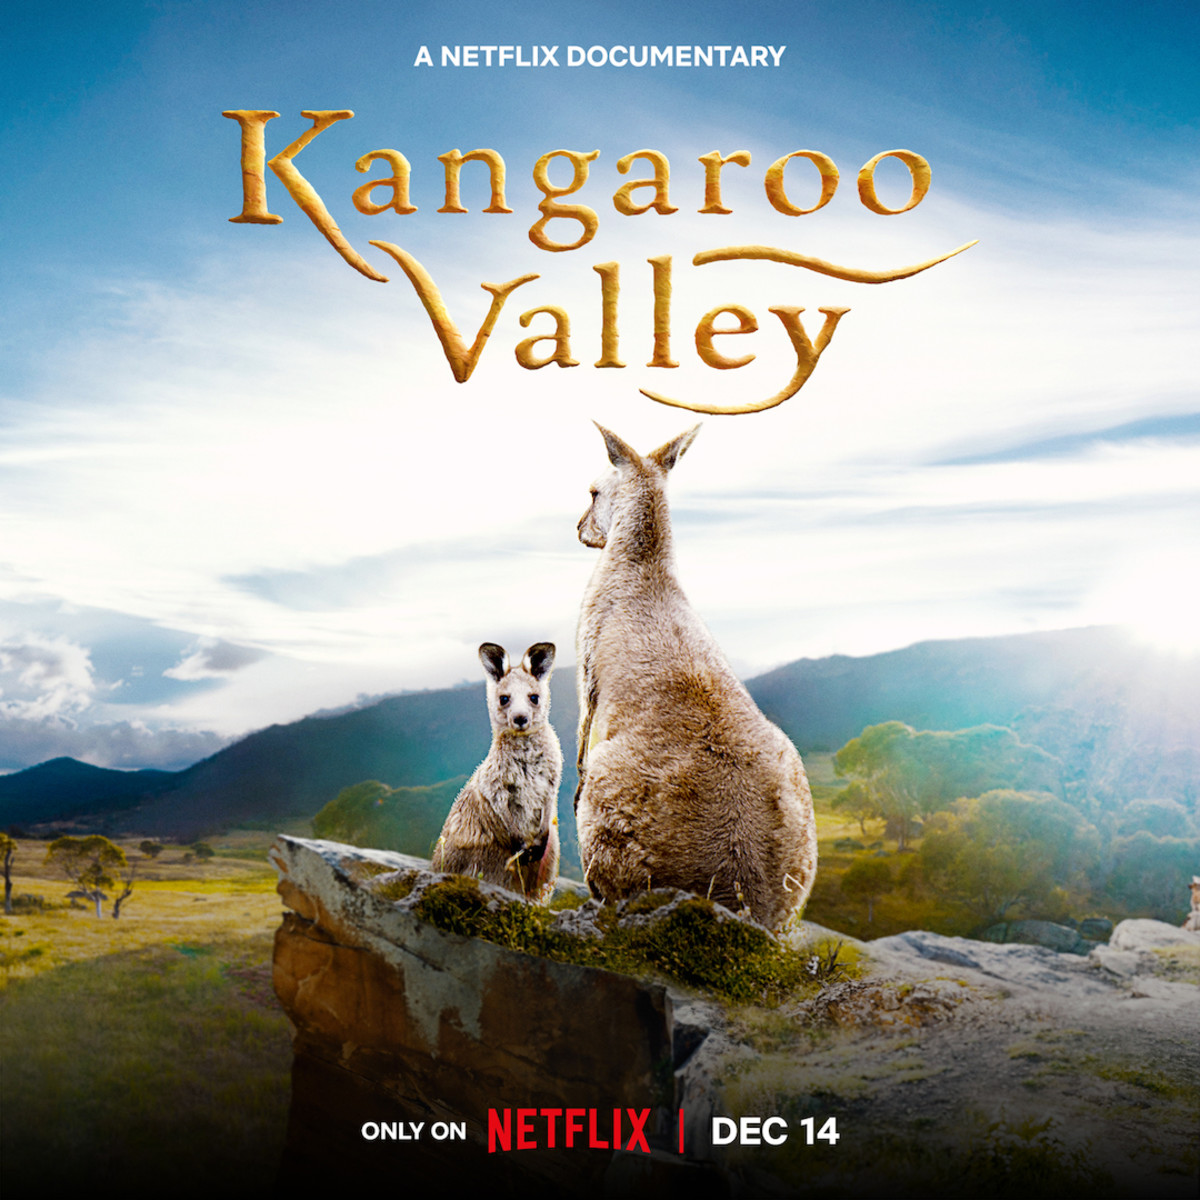 Kangaroo Valley. Courtesy of Netflix.